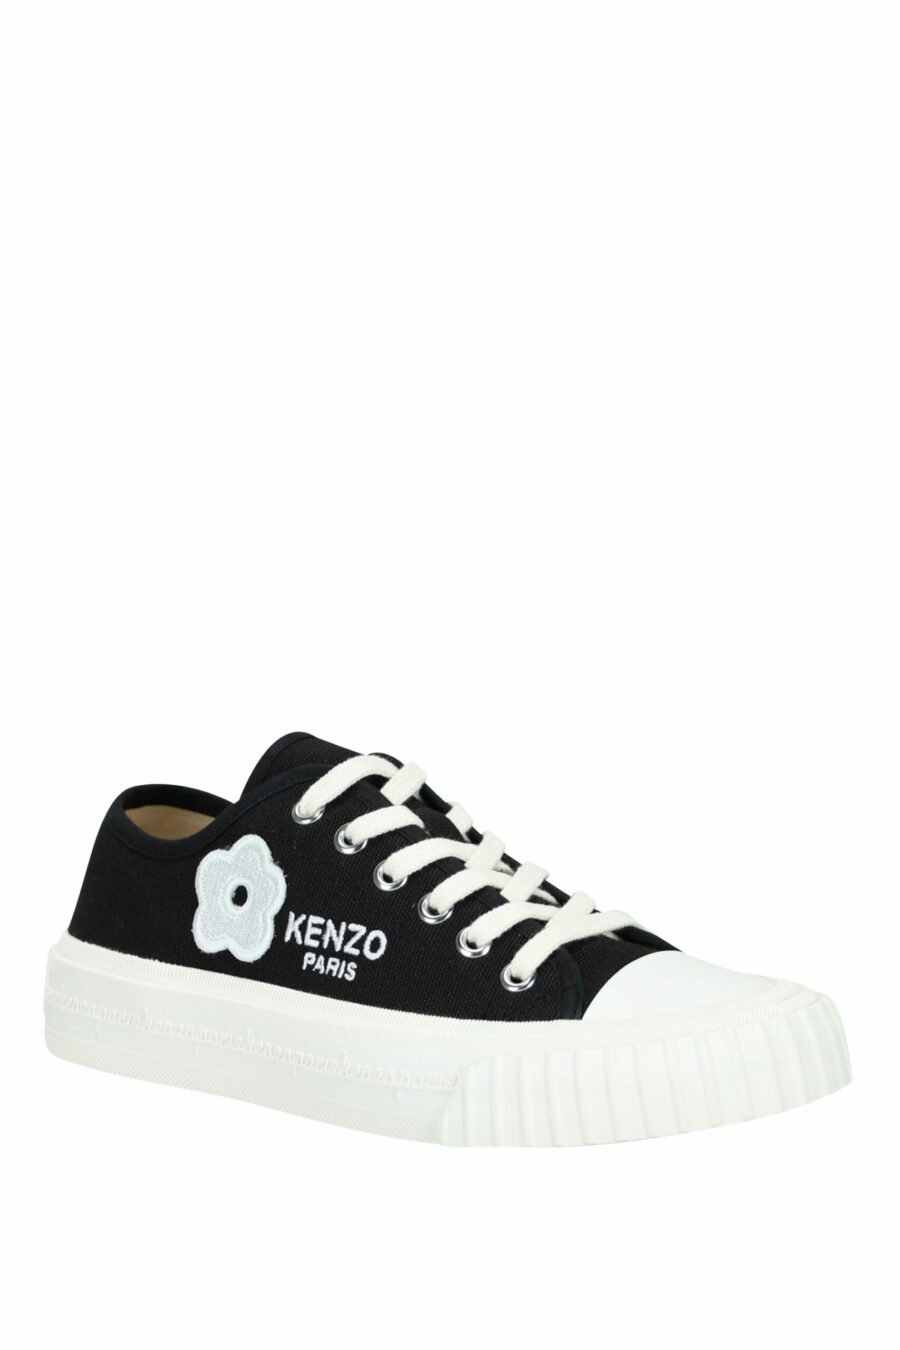 Zapatillas negras "kenzo foxy" con logo "boke flower" blanco - 3612230639430 1 scaled